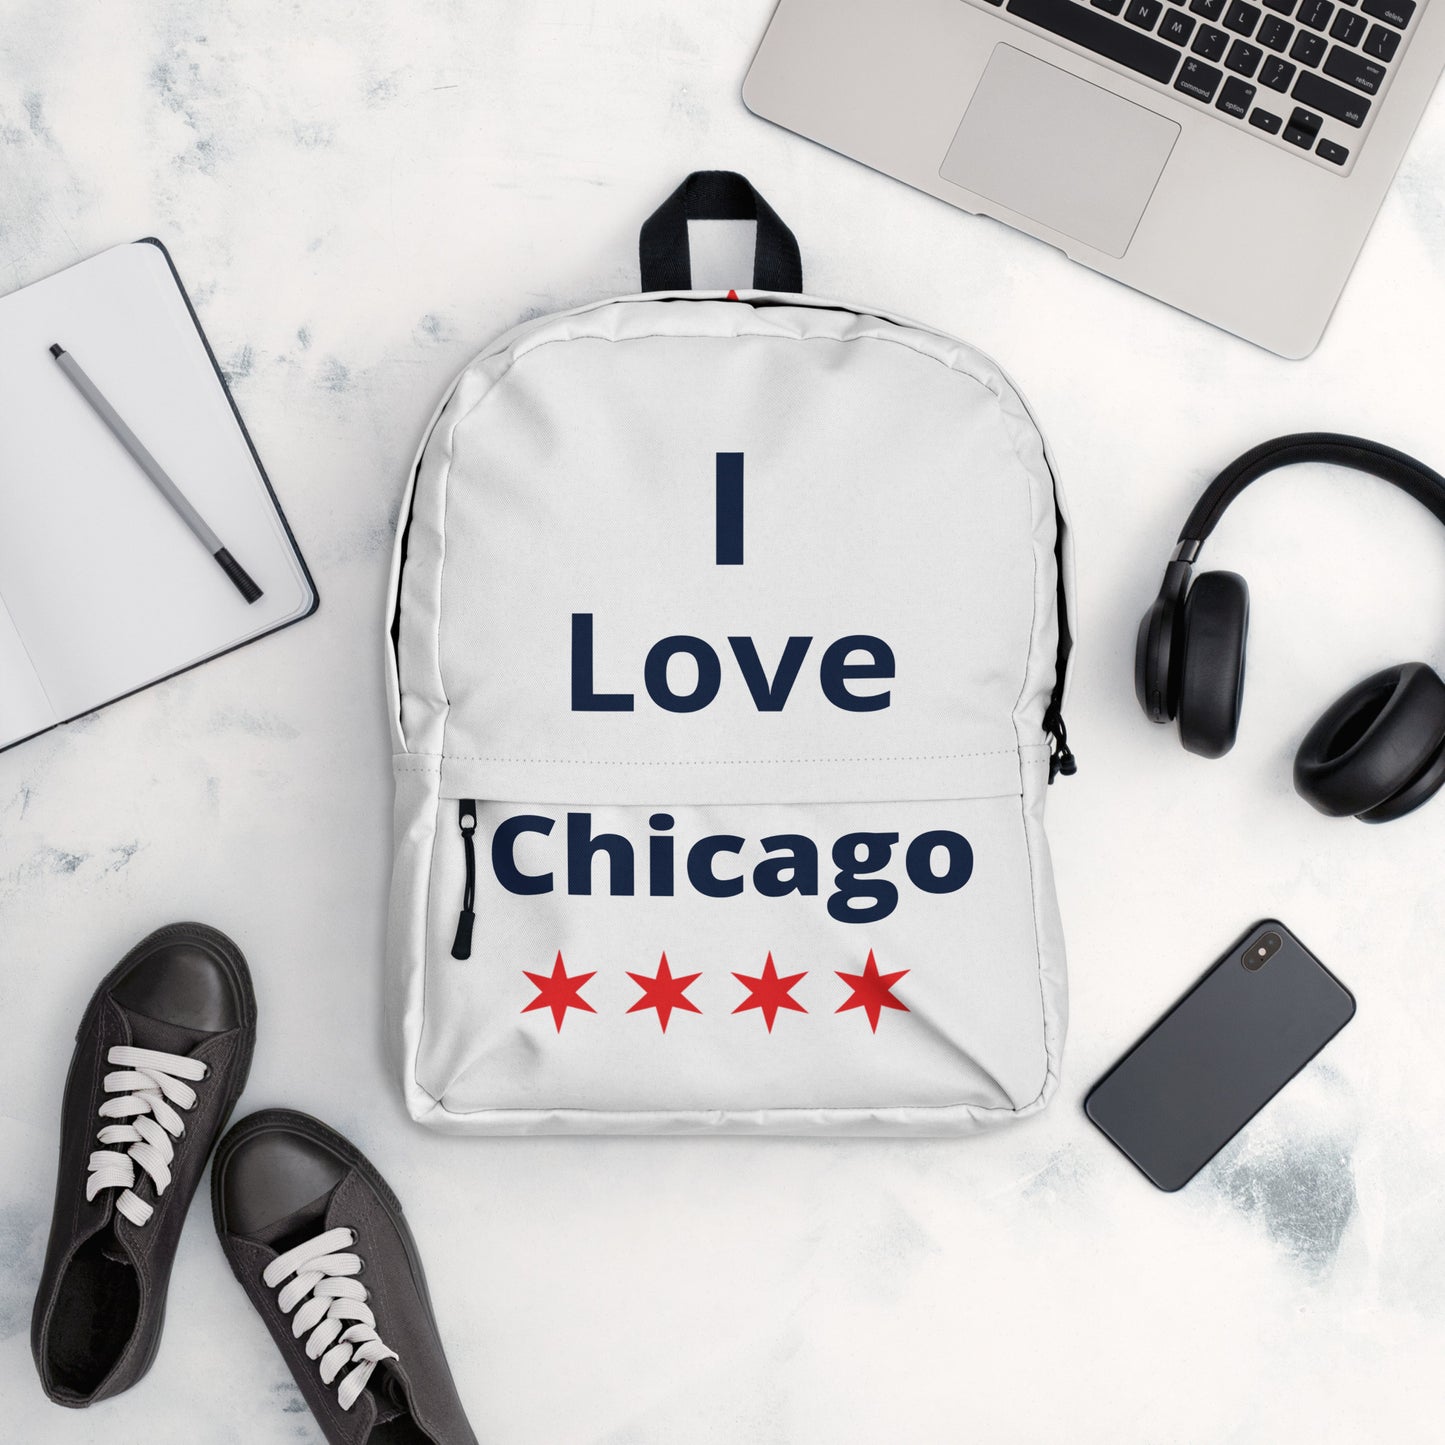 Chicago Backpack